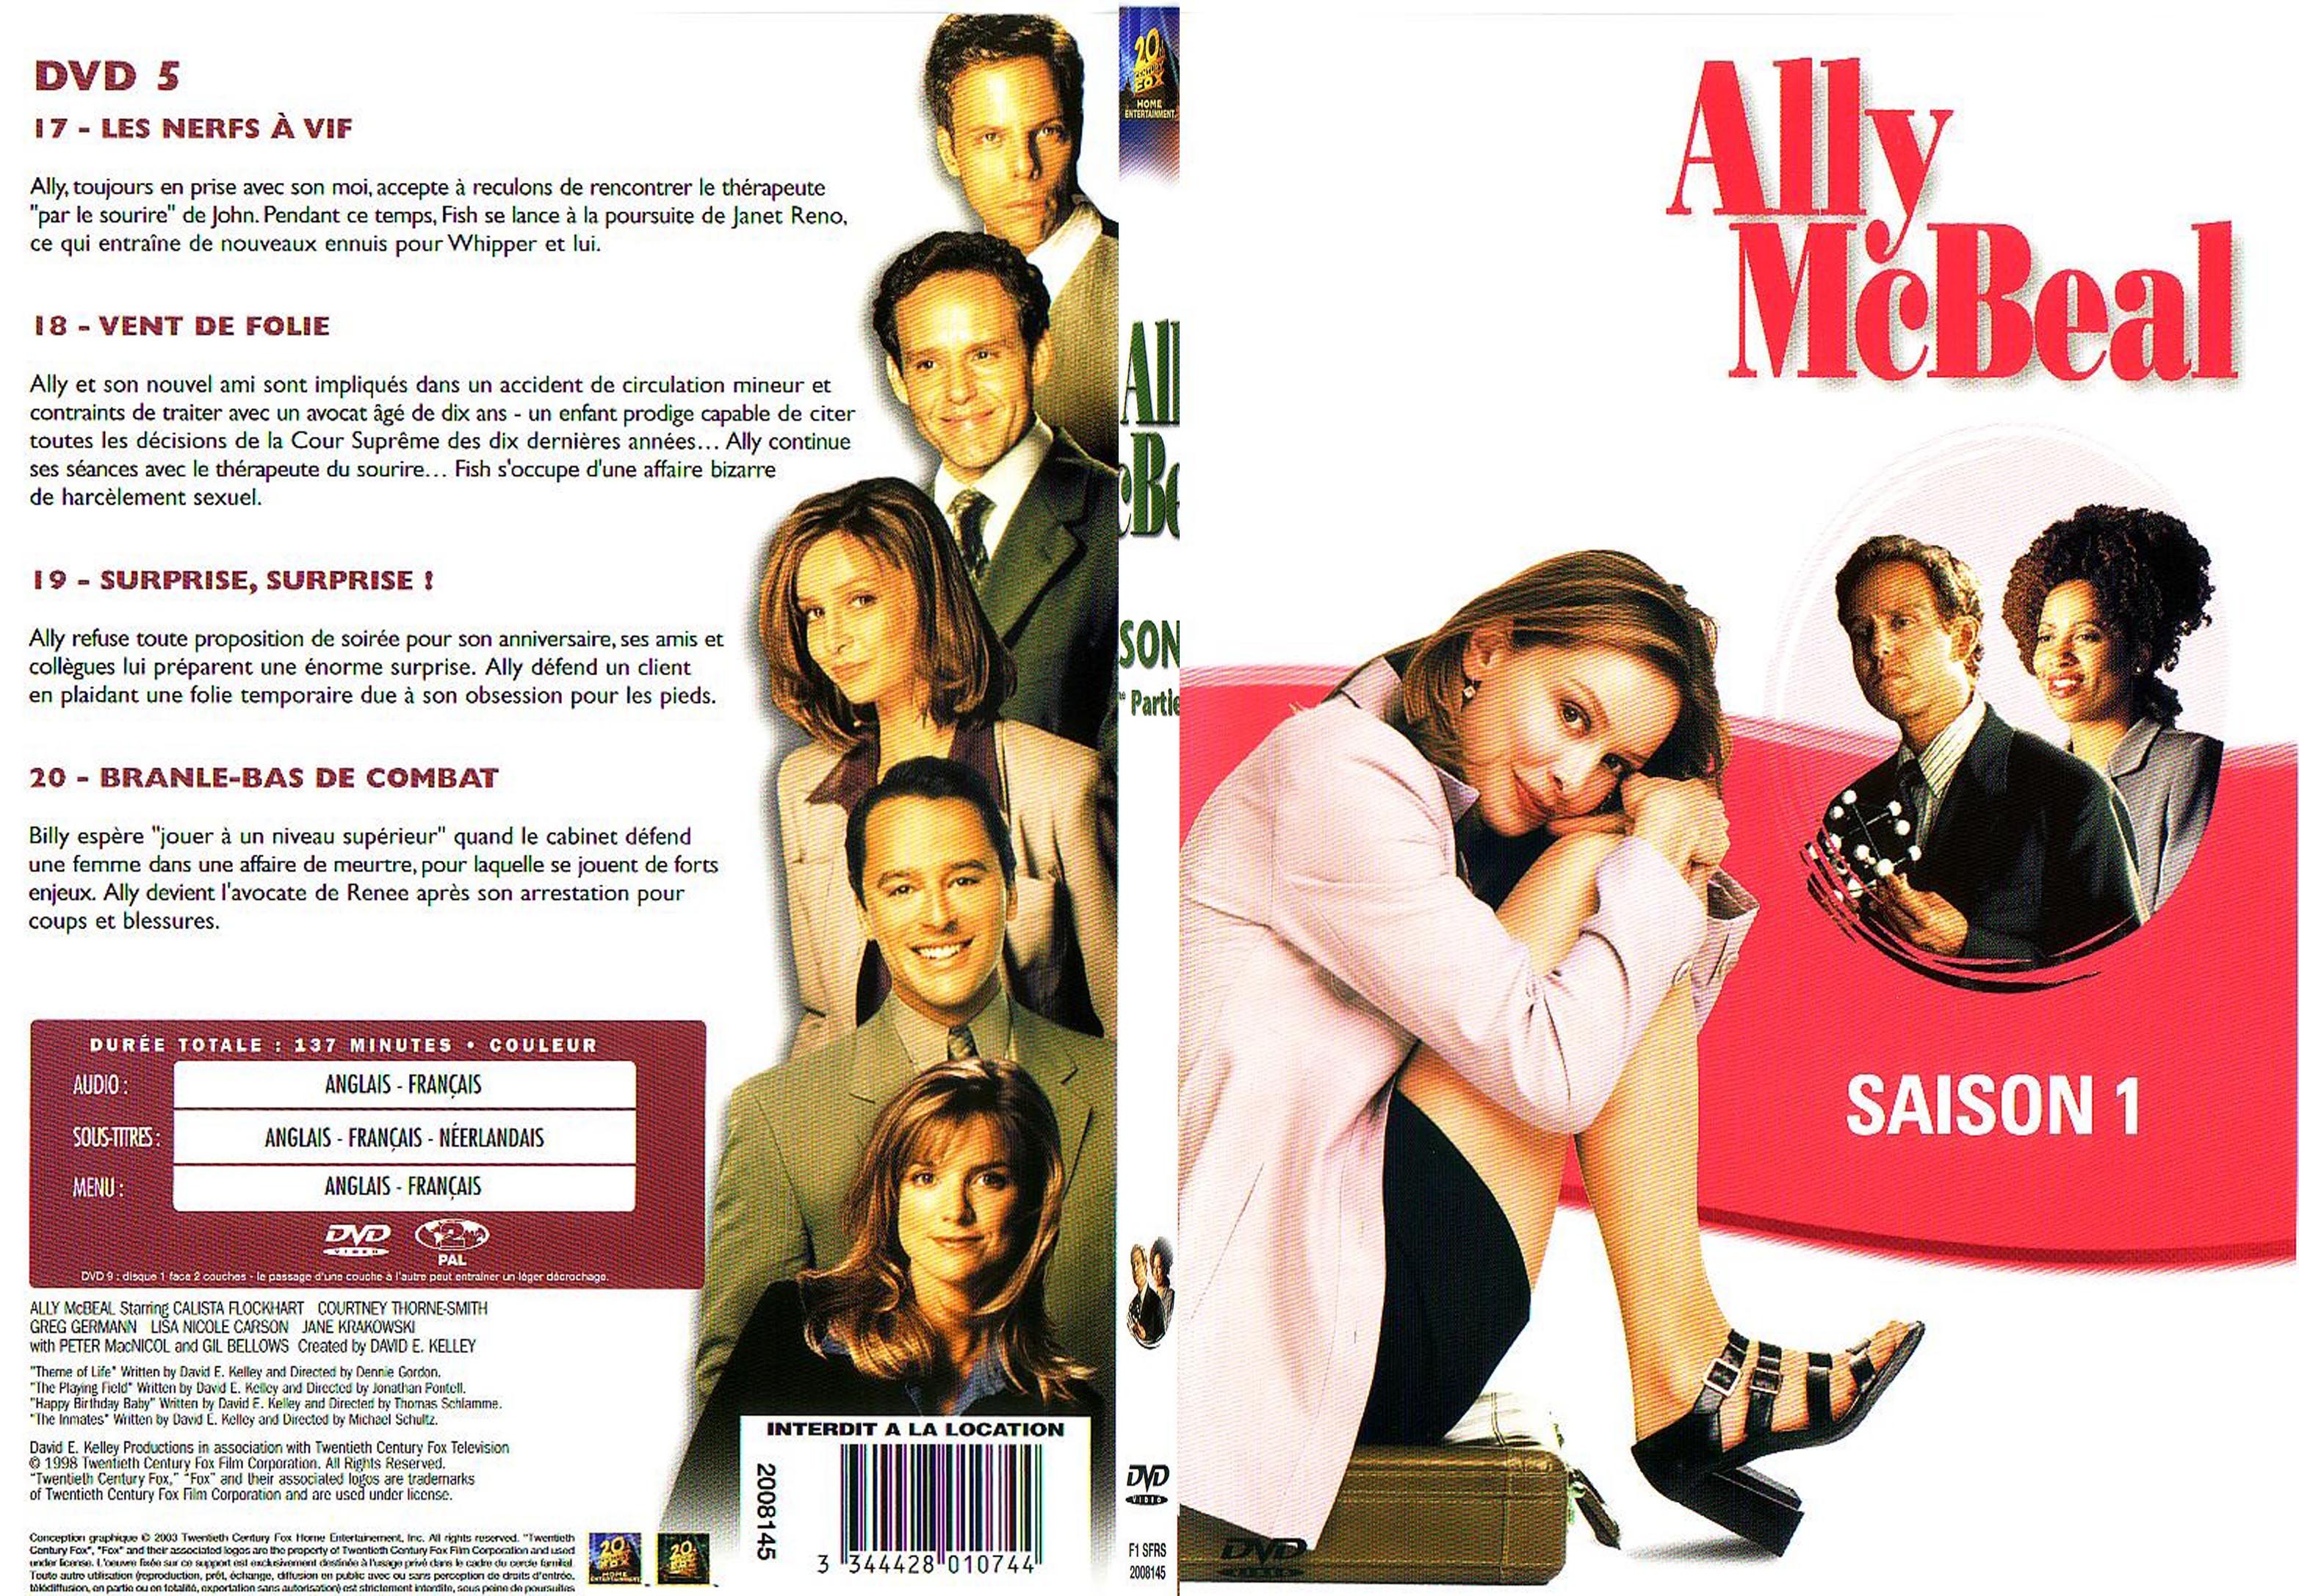 Jaquette DVD Ally McBeal saison 1 dvd 5 - SLIM